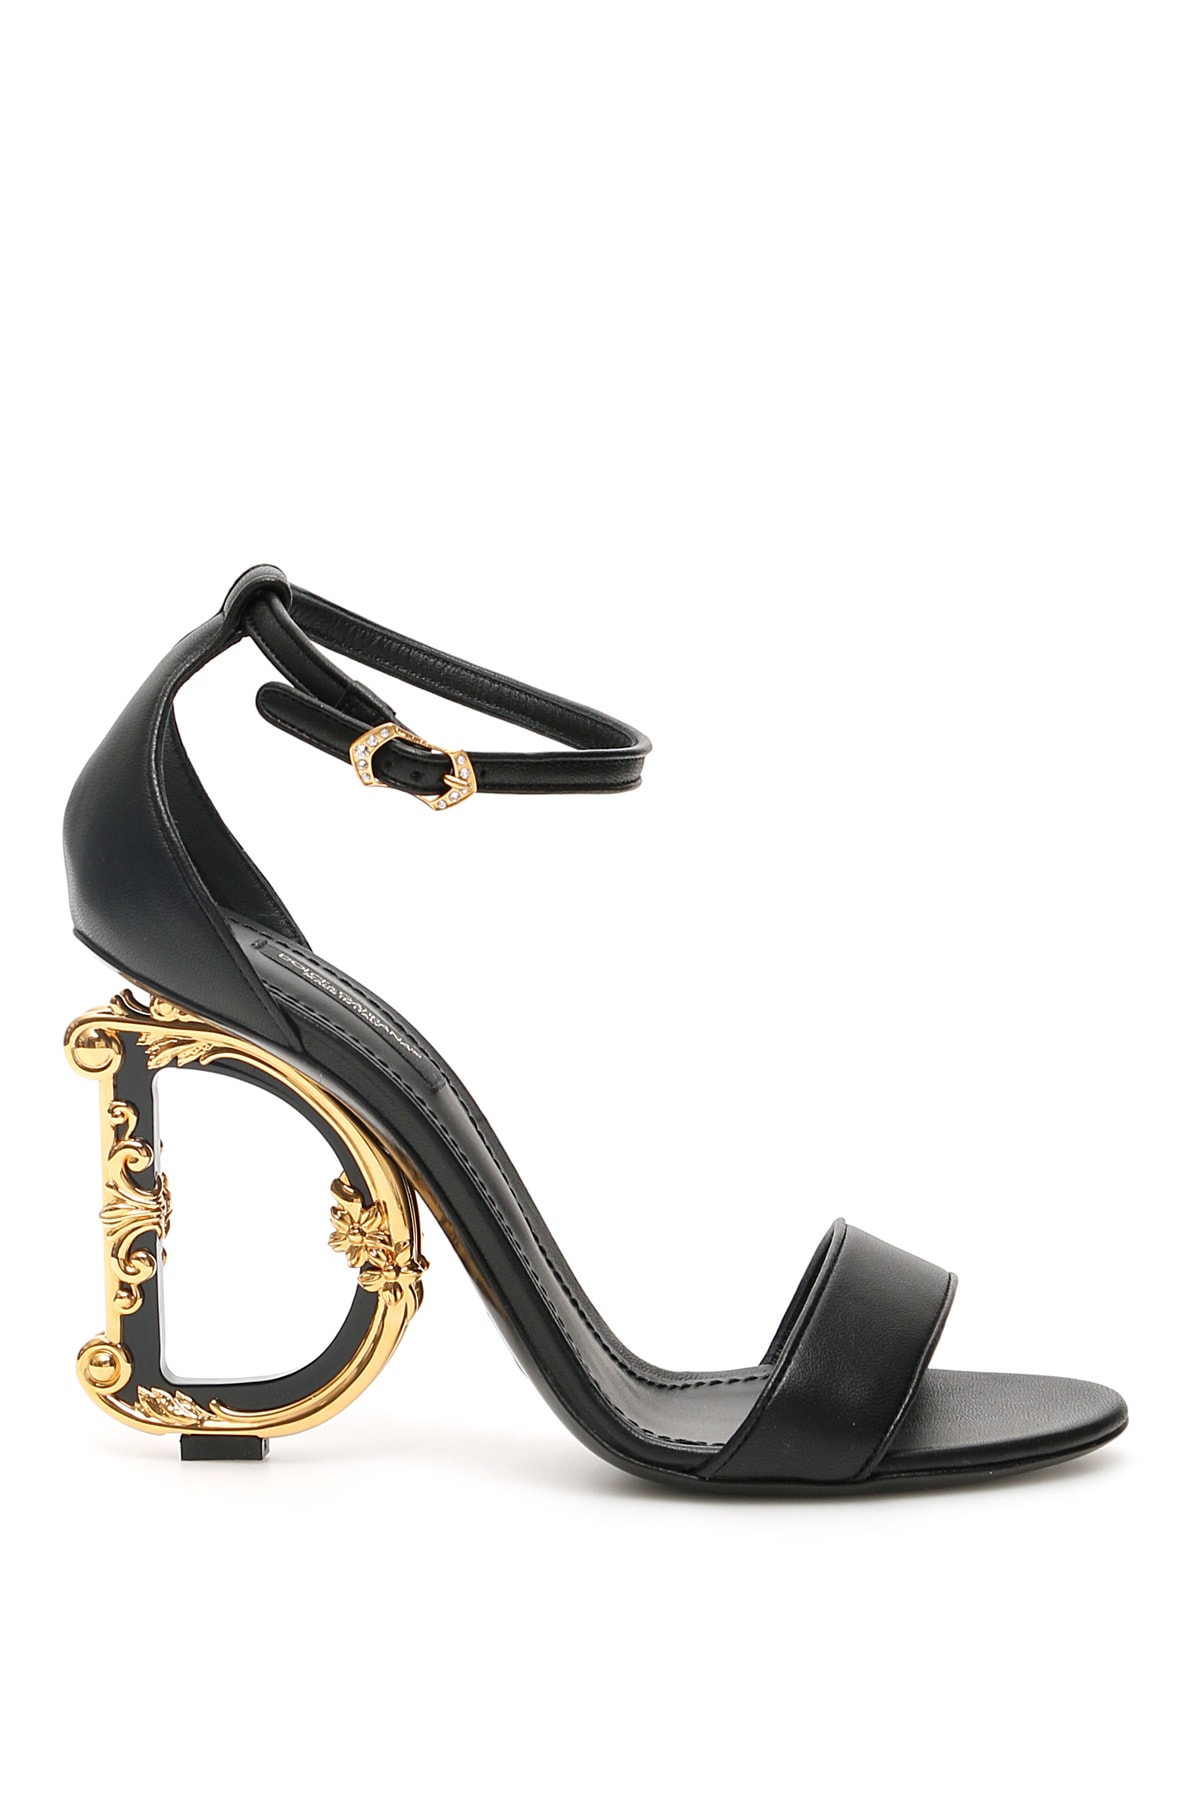 Dolce & Gabbana Dg Barocco Keira Sandals